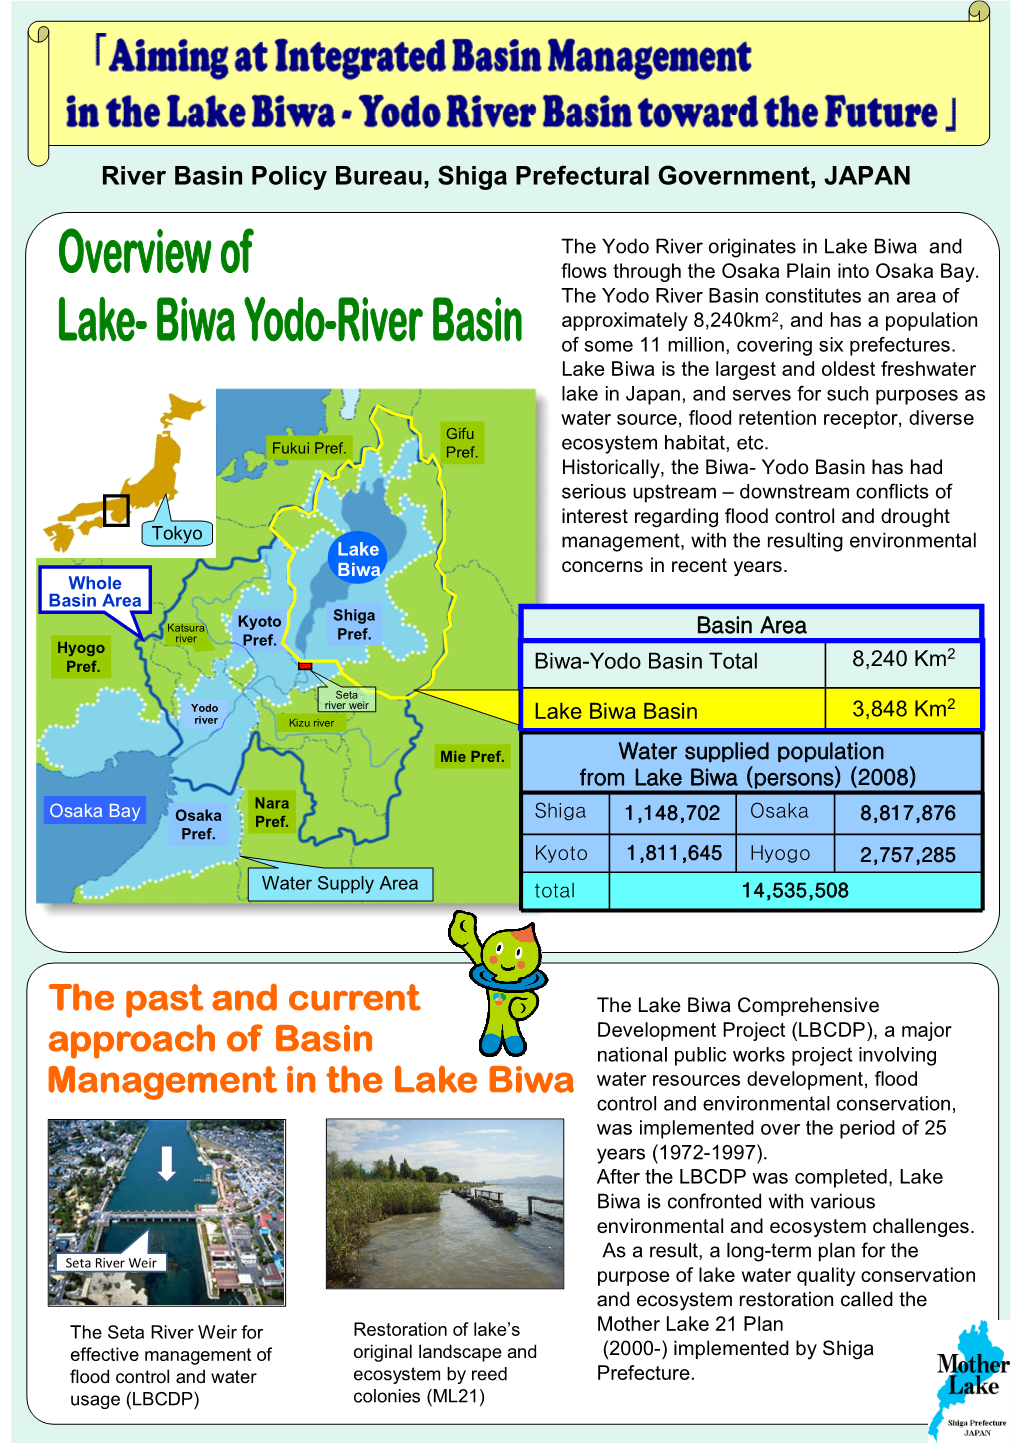 River Basin Policy Bureau, Shiga Prefectural Government, JAPAN